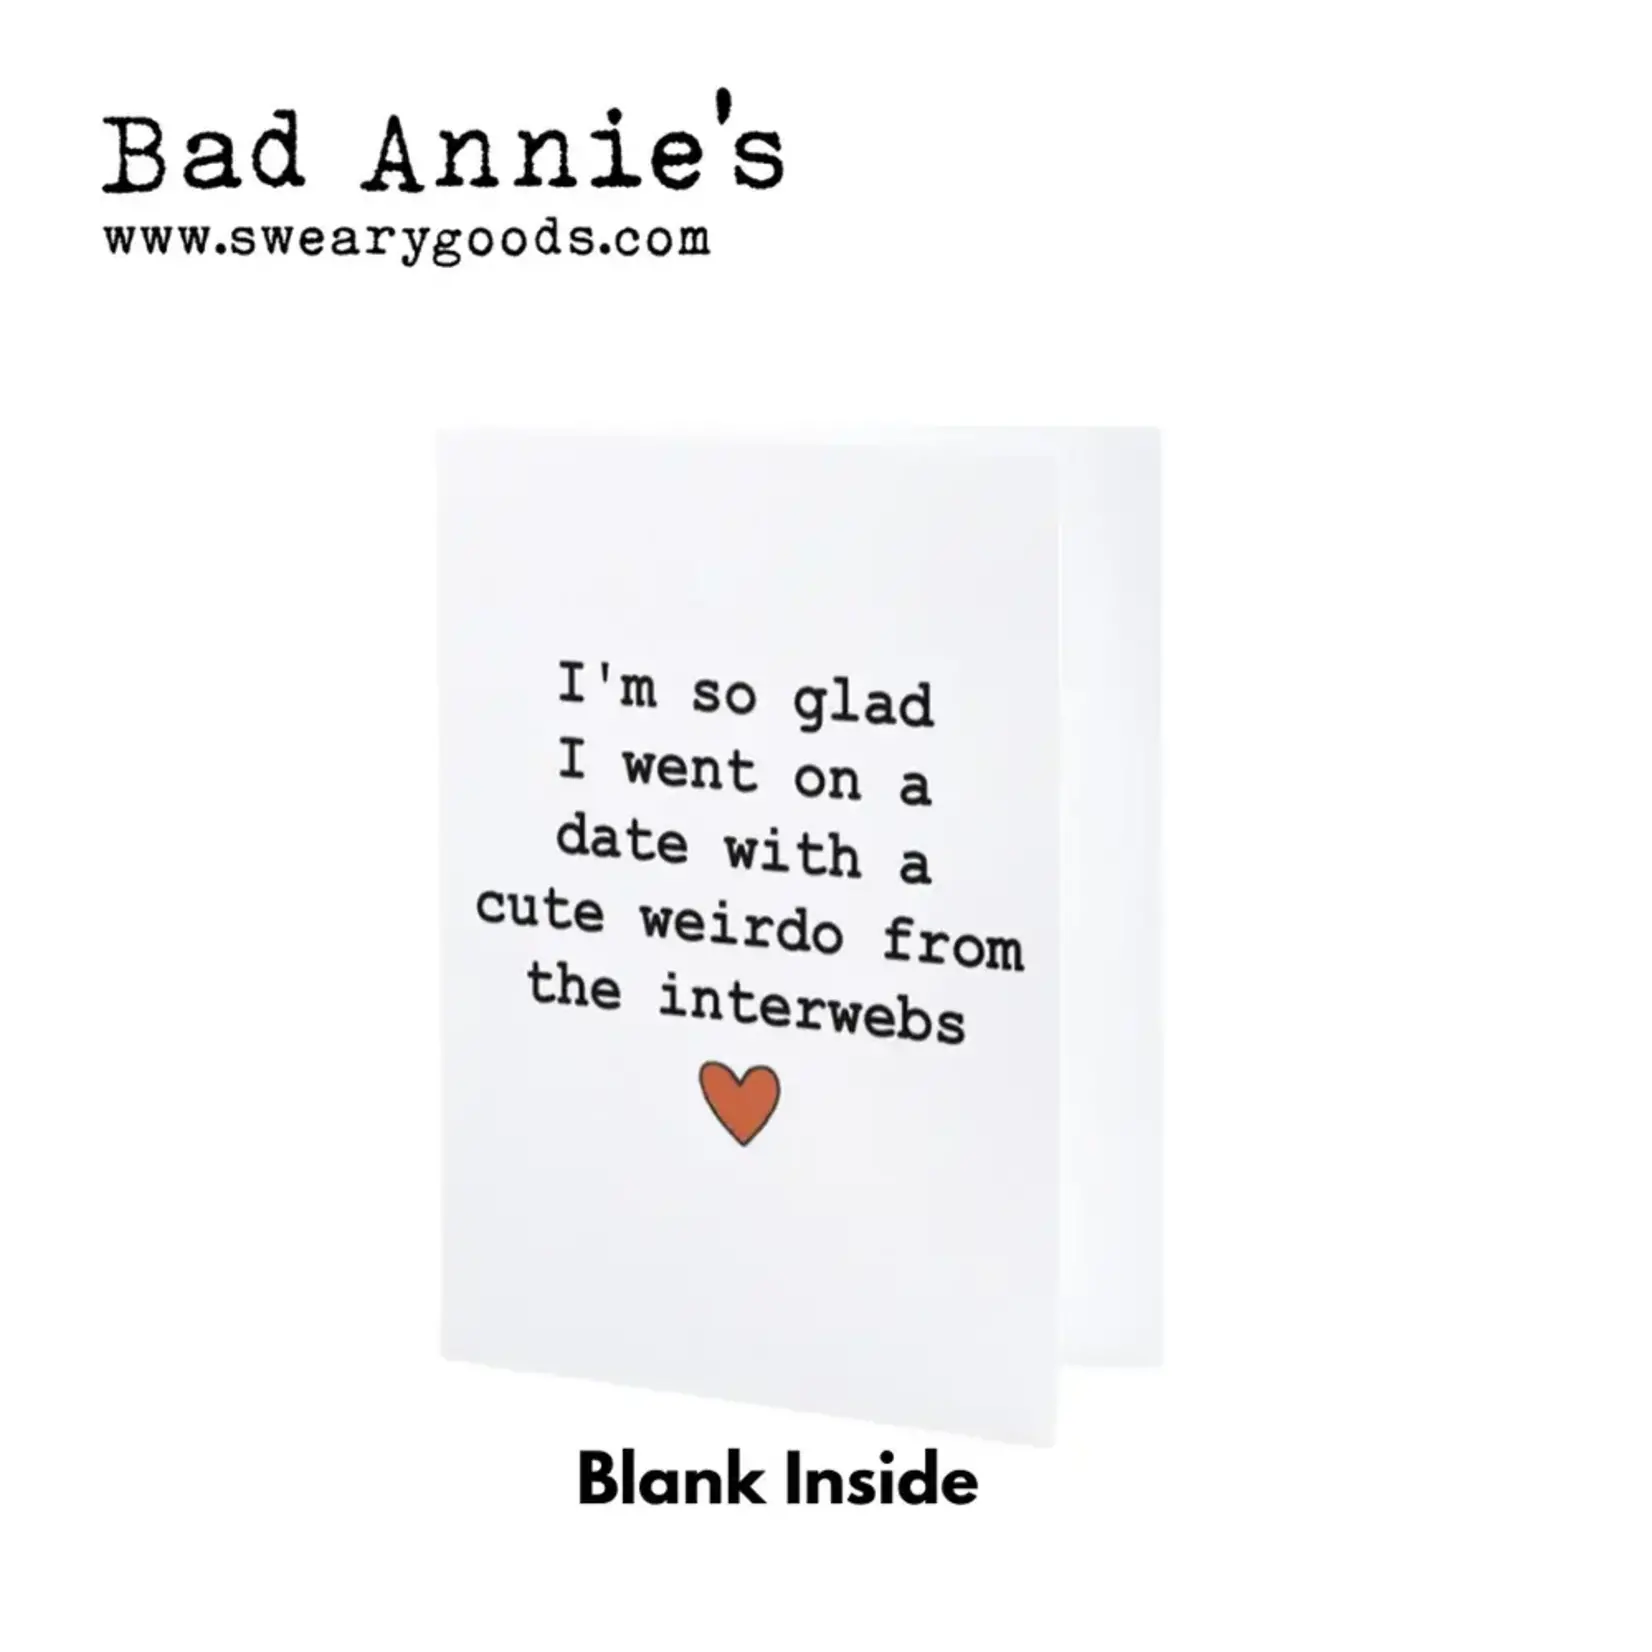 Bad Annie’s Card - I’m so glad I went on a date with a cute weirdo from the interwebs